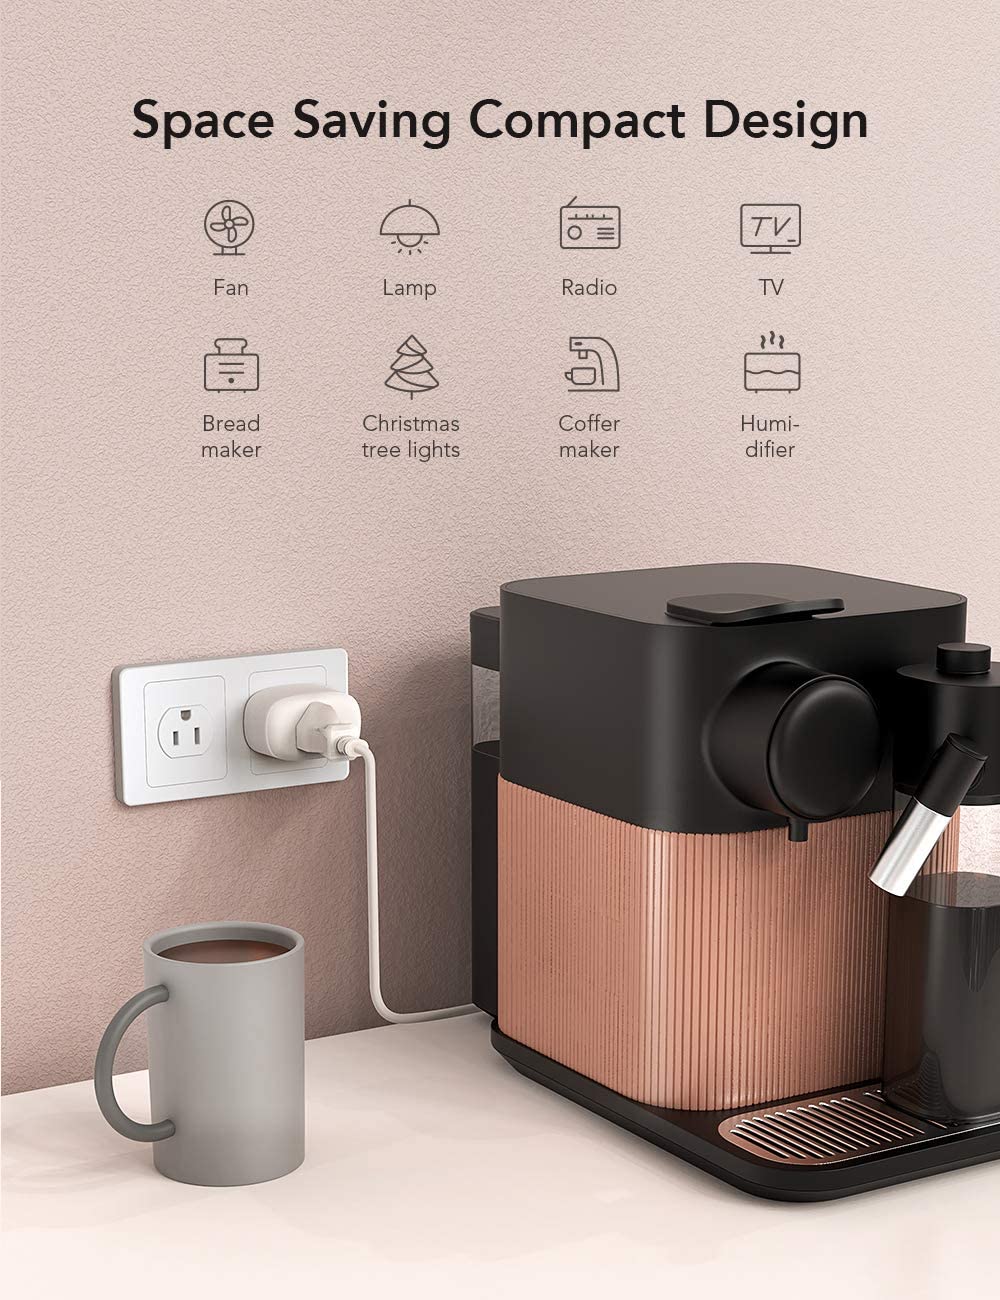 NSP01 WiFi Smart Plug for Smart Home Works with Alexa